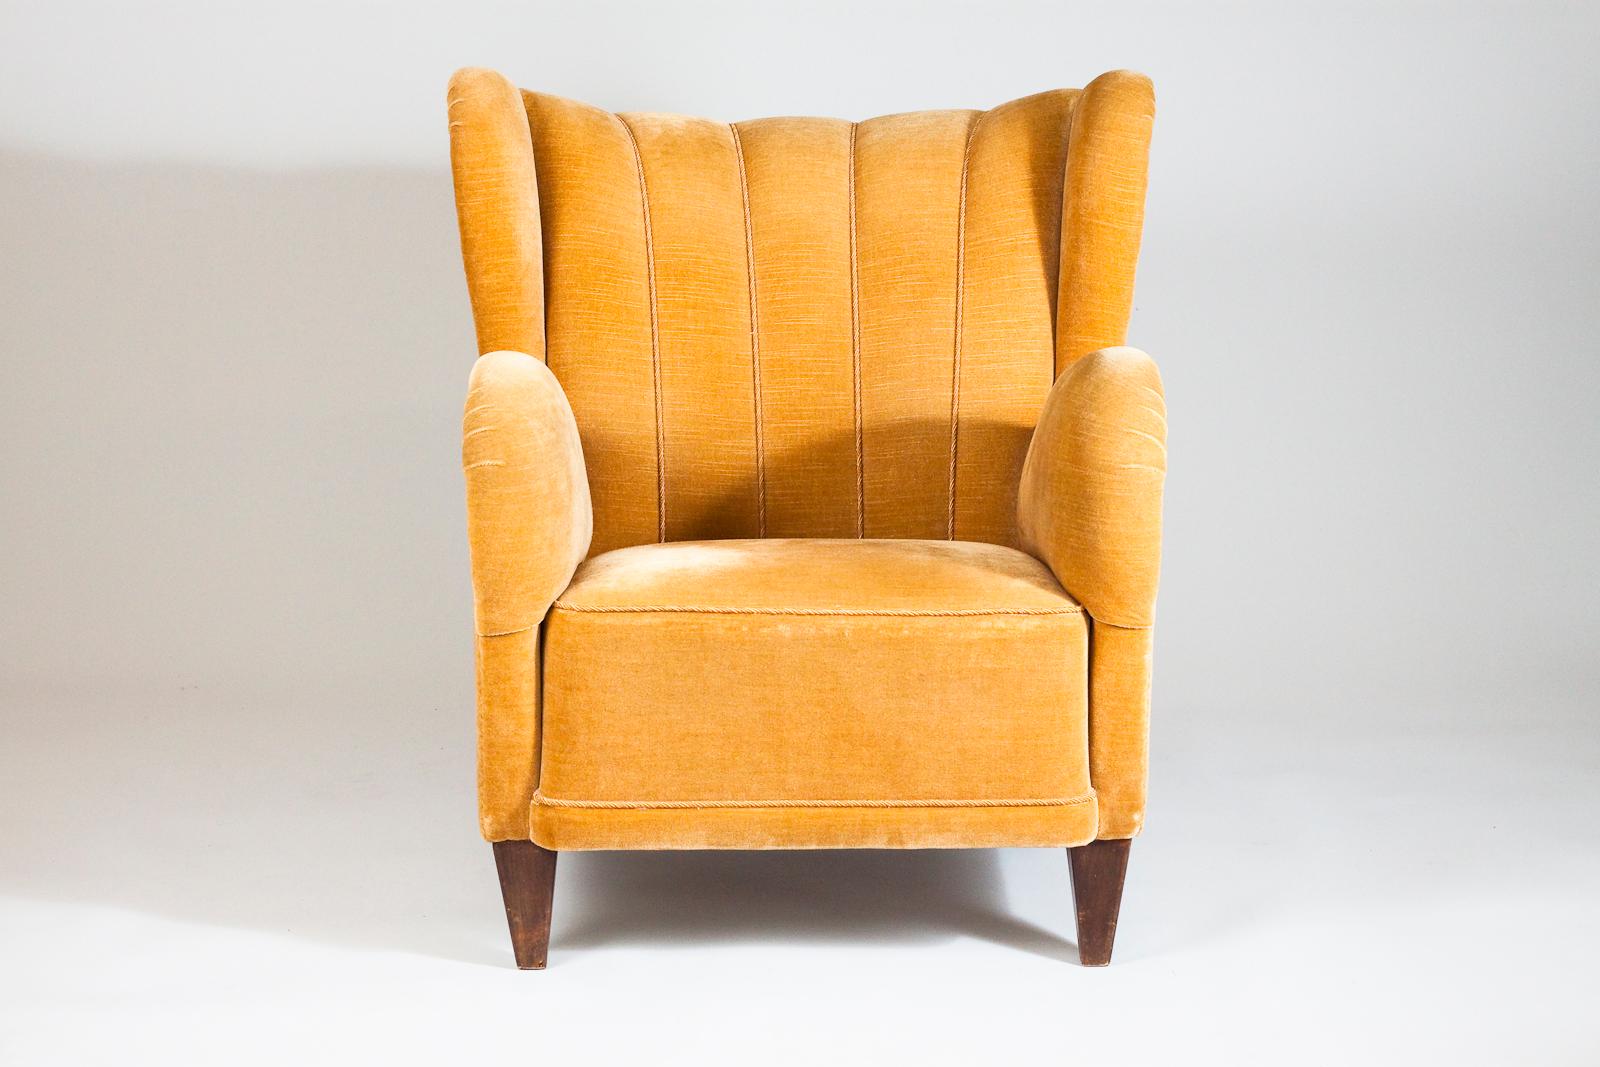 Mid-20th Century Scandinavian Modern Club Chair in Mustard Yellow Velvet For Sale